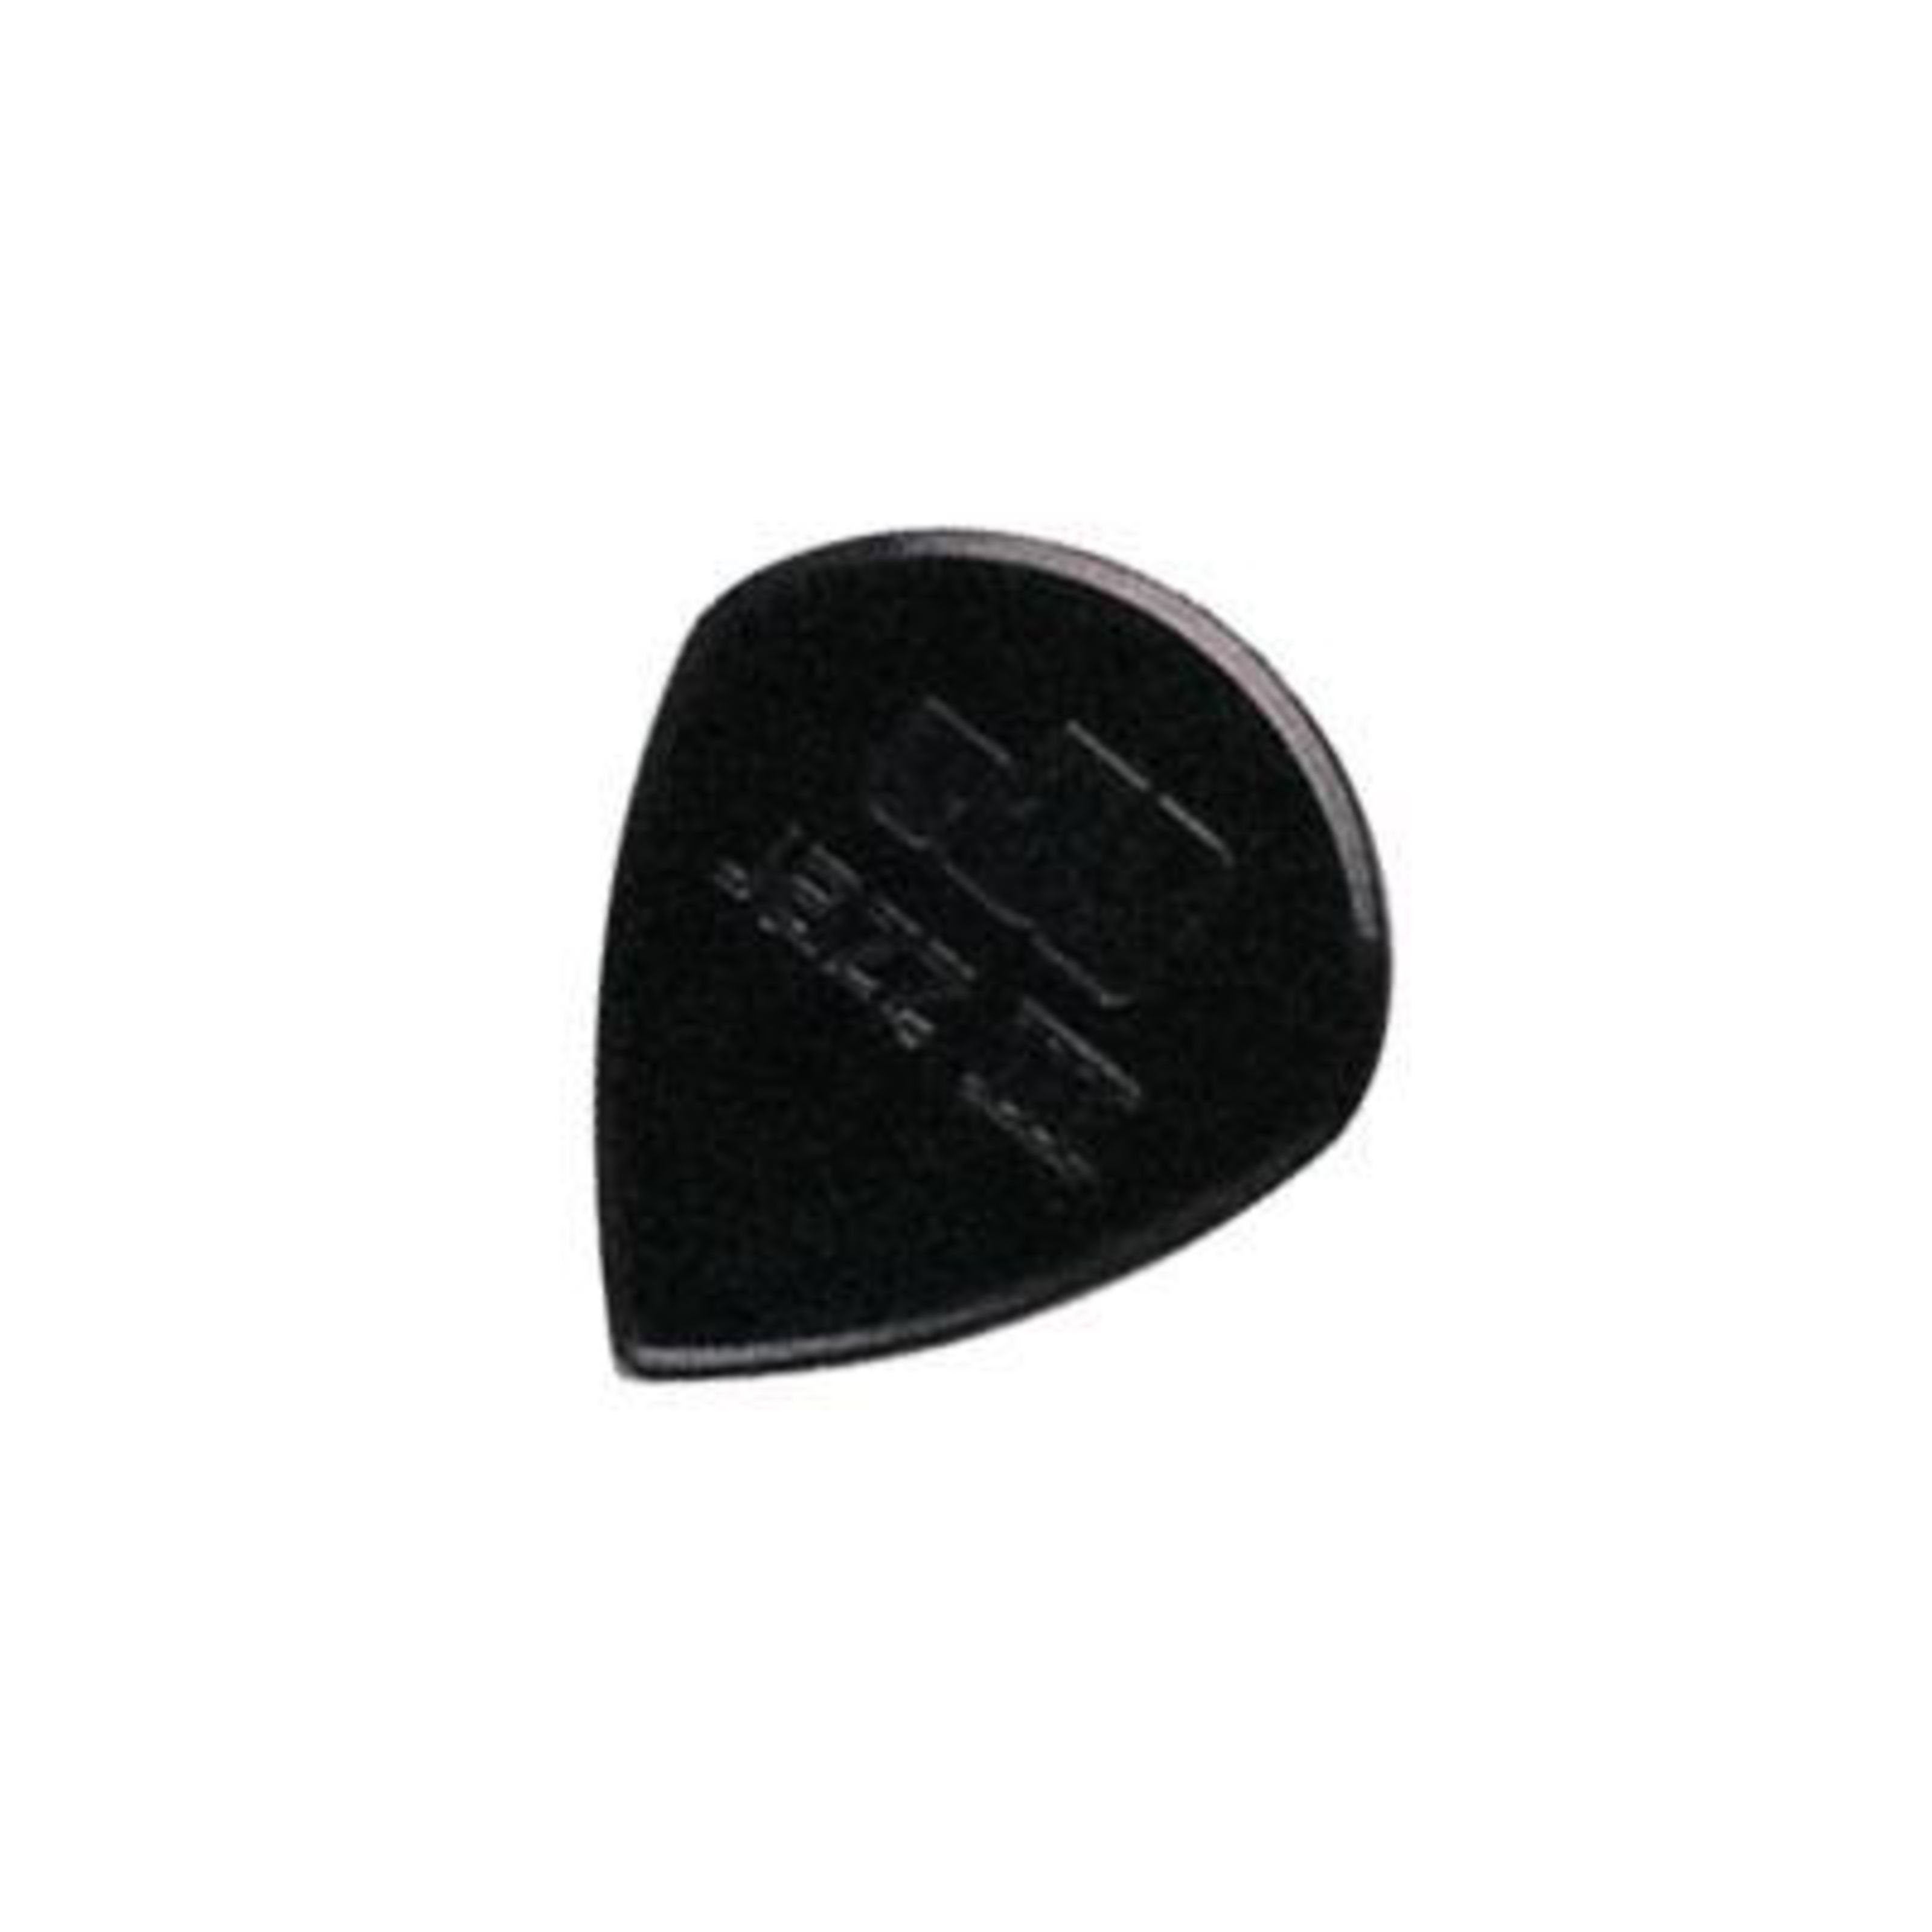 Dunlop Plektrum, Jazz III XL Plektren 1,38 schwarz, 24er Set - Plektren Set